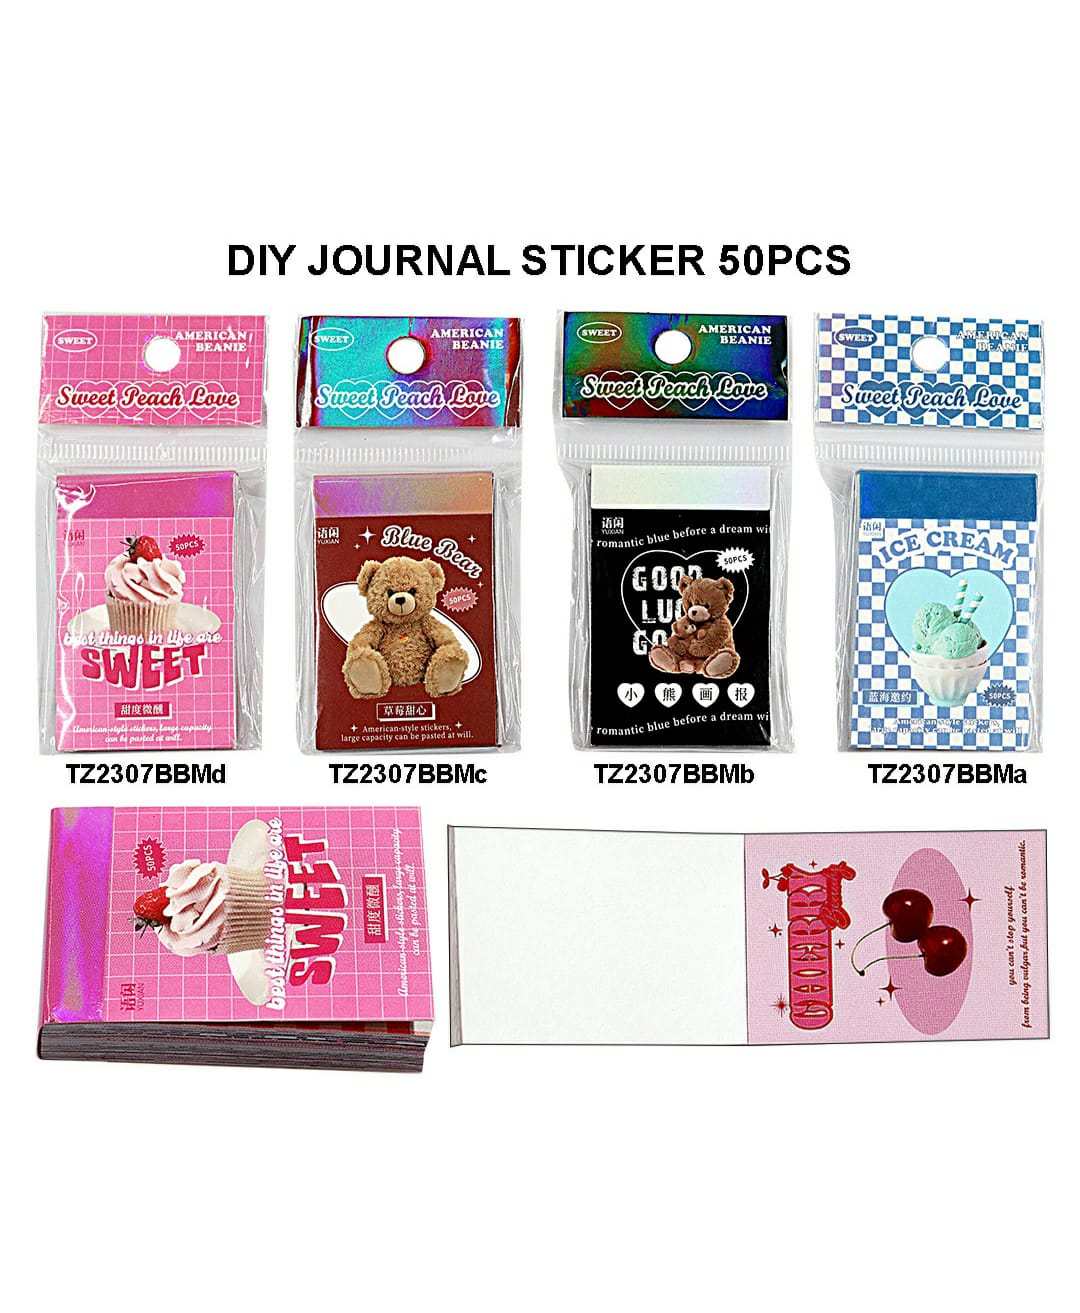 Diy Journal Sticker 50Pcs 306 Tz2307Bbm | INKARTO